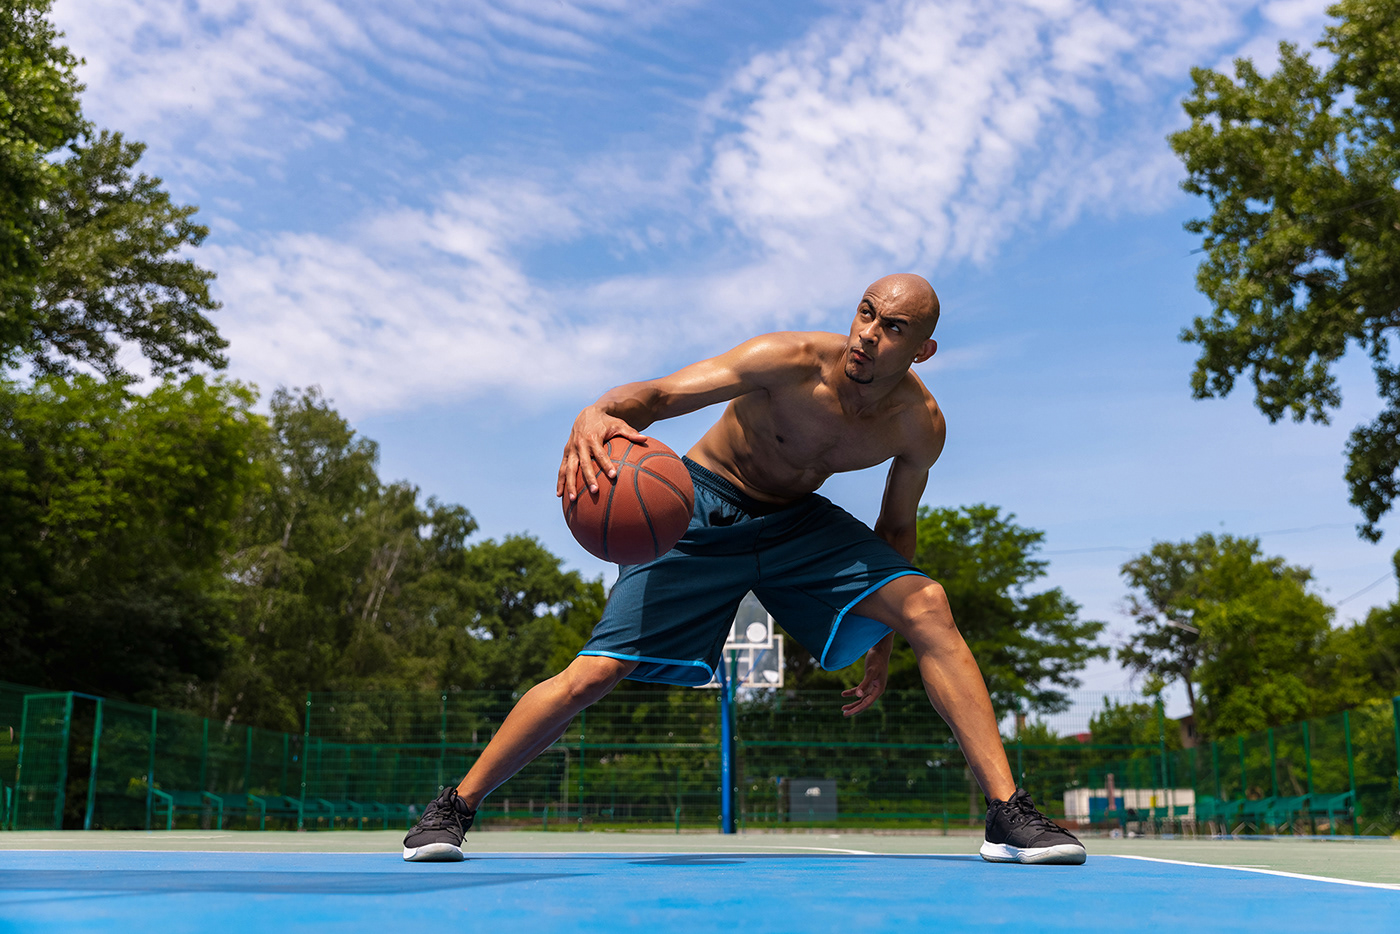 basketball jump lifestyle outdor sport Streetball training